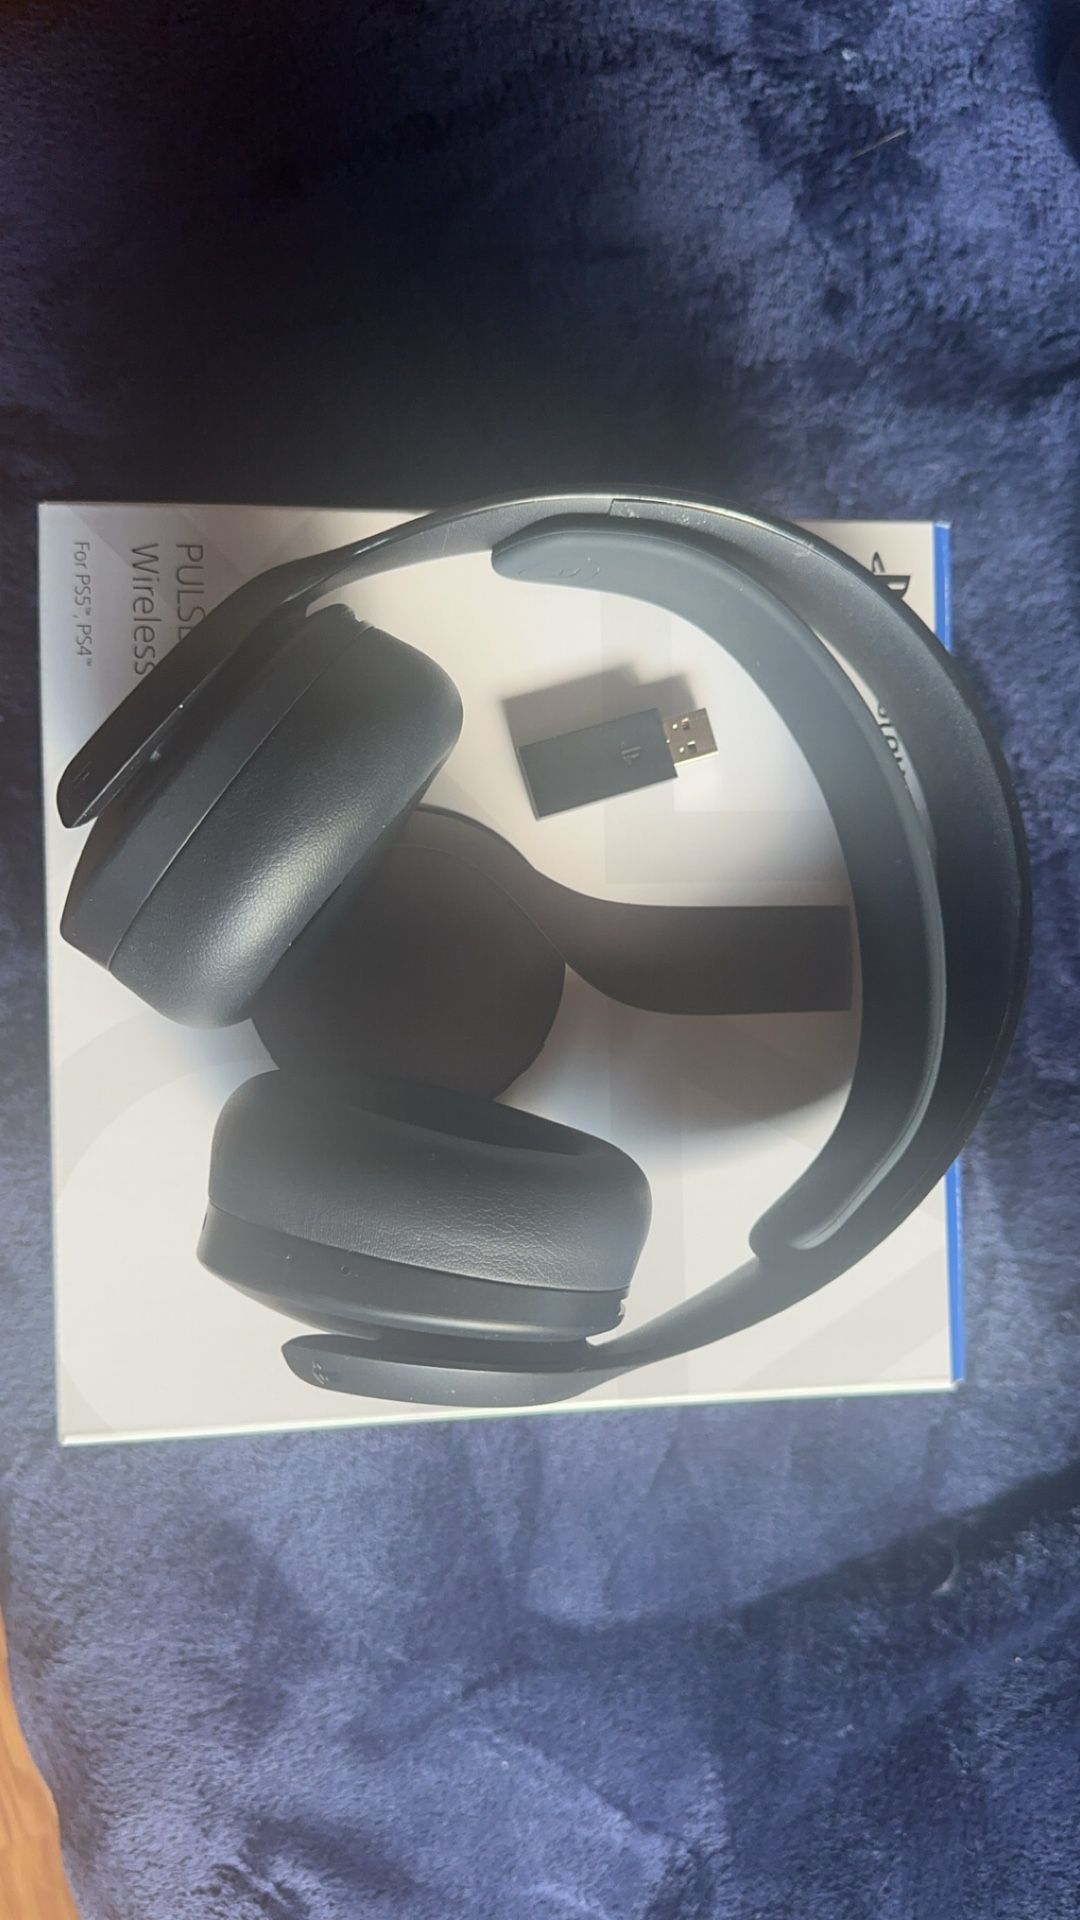 PlayStation Pulse 3d Wireless Headset 